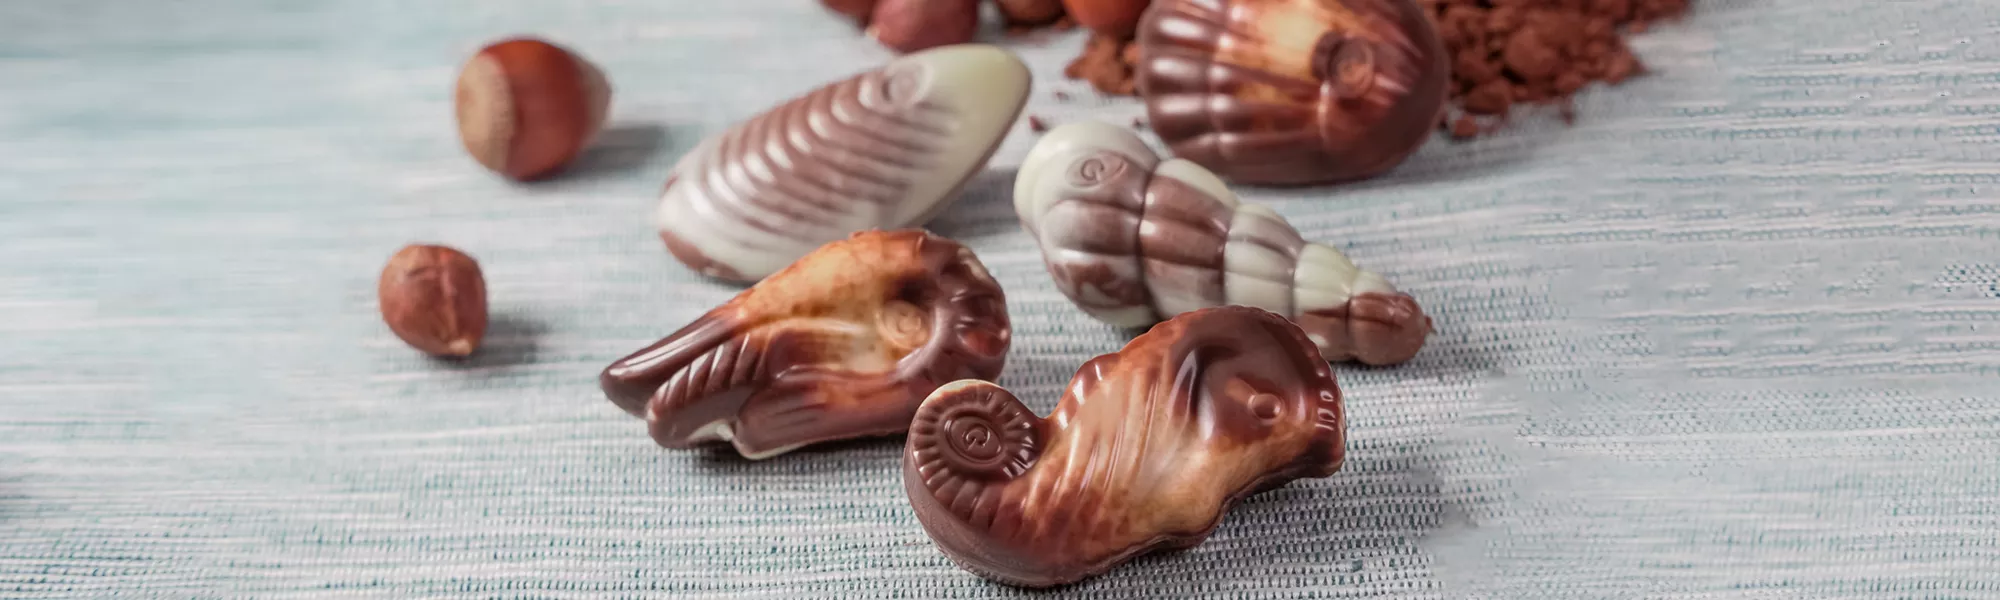 Guylian 22-Piece Chocolate Seashells Original Praliné